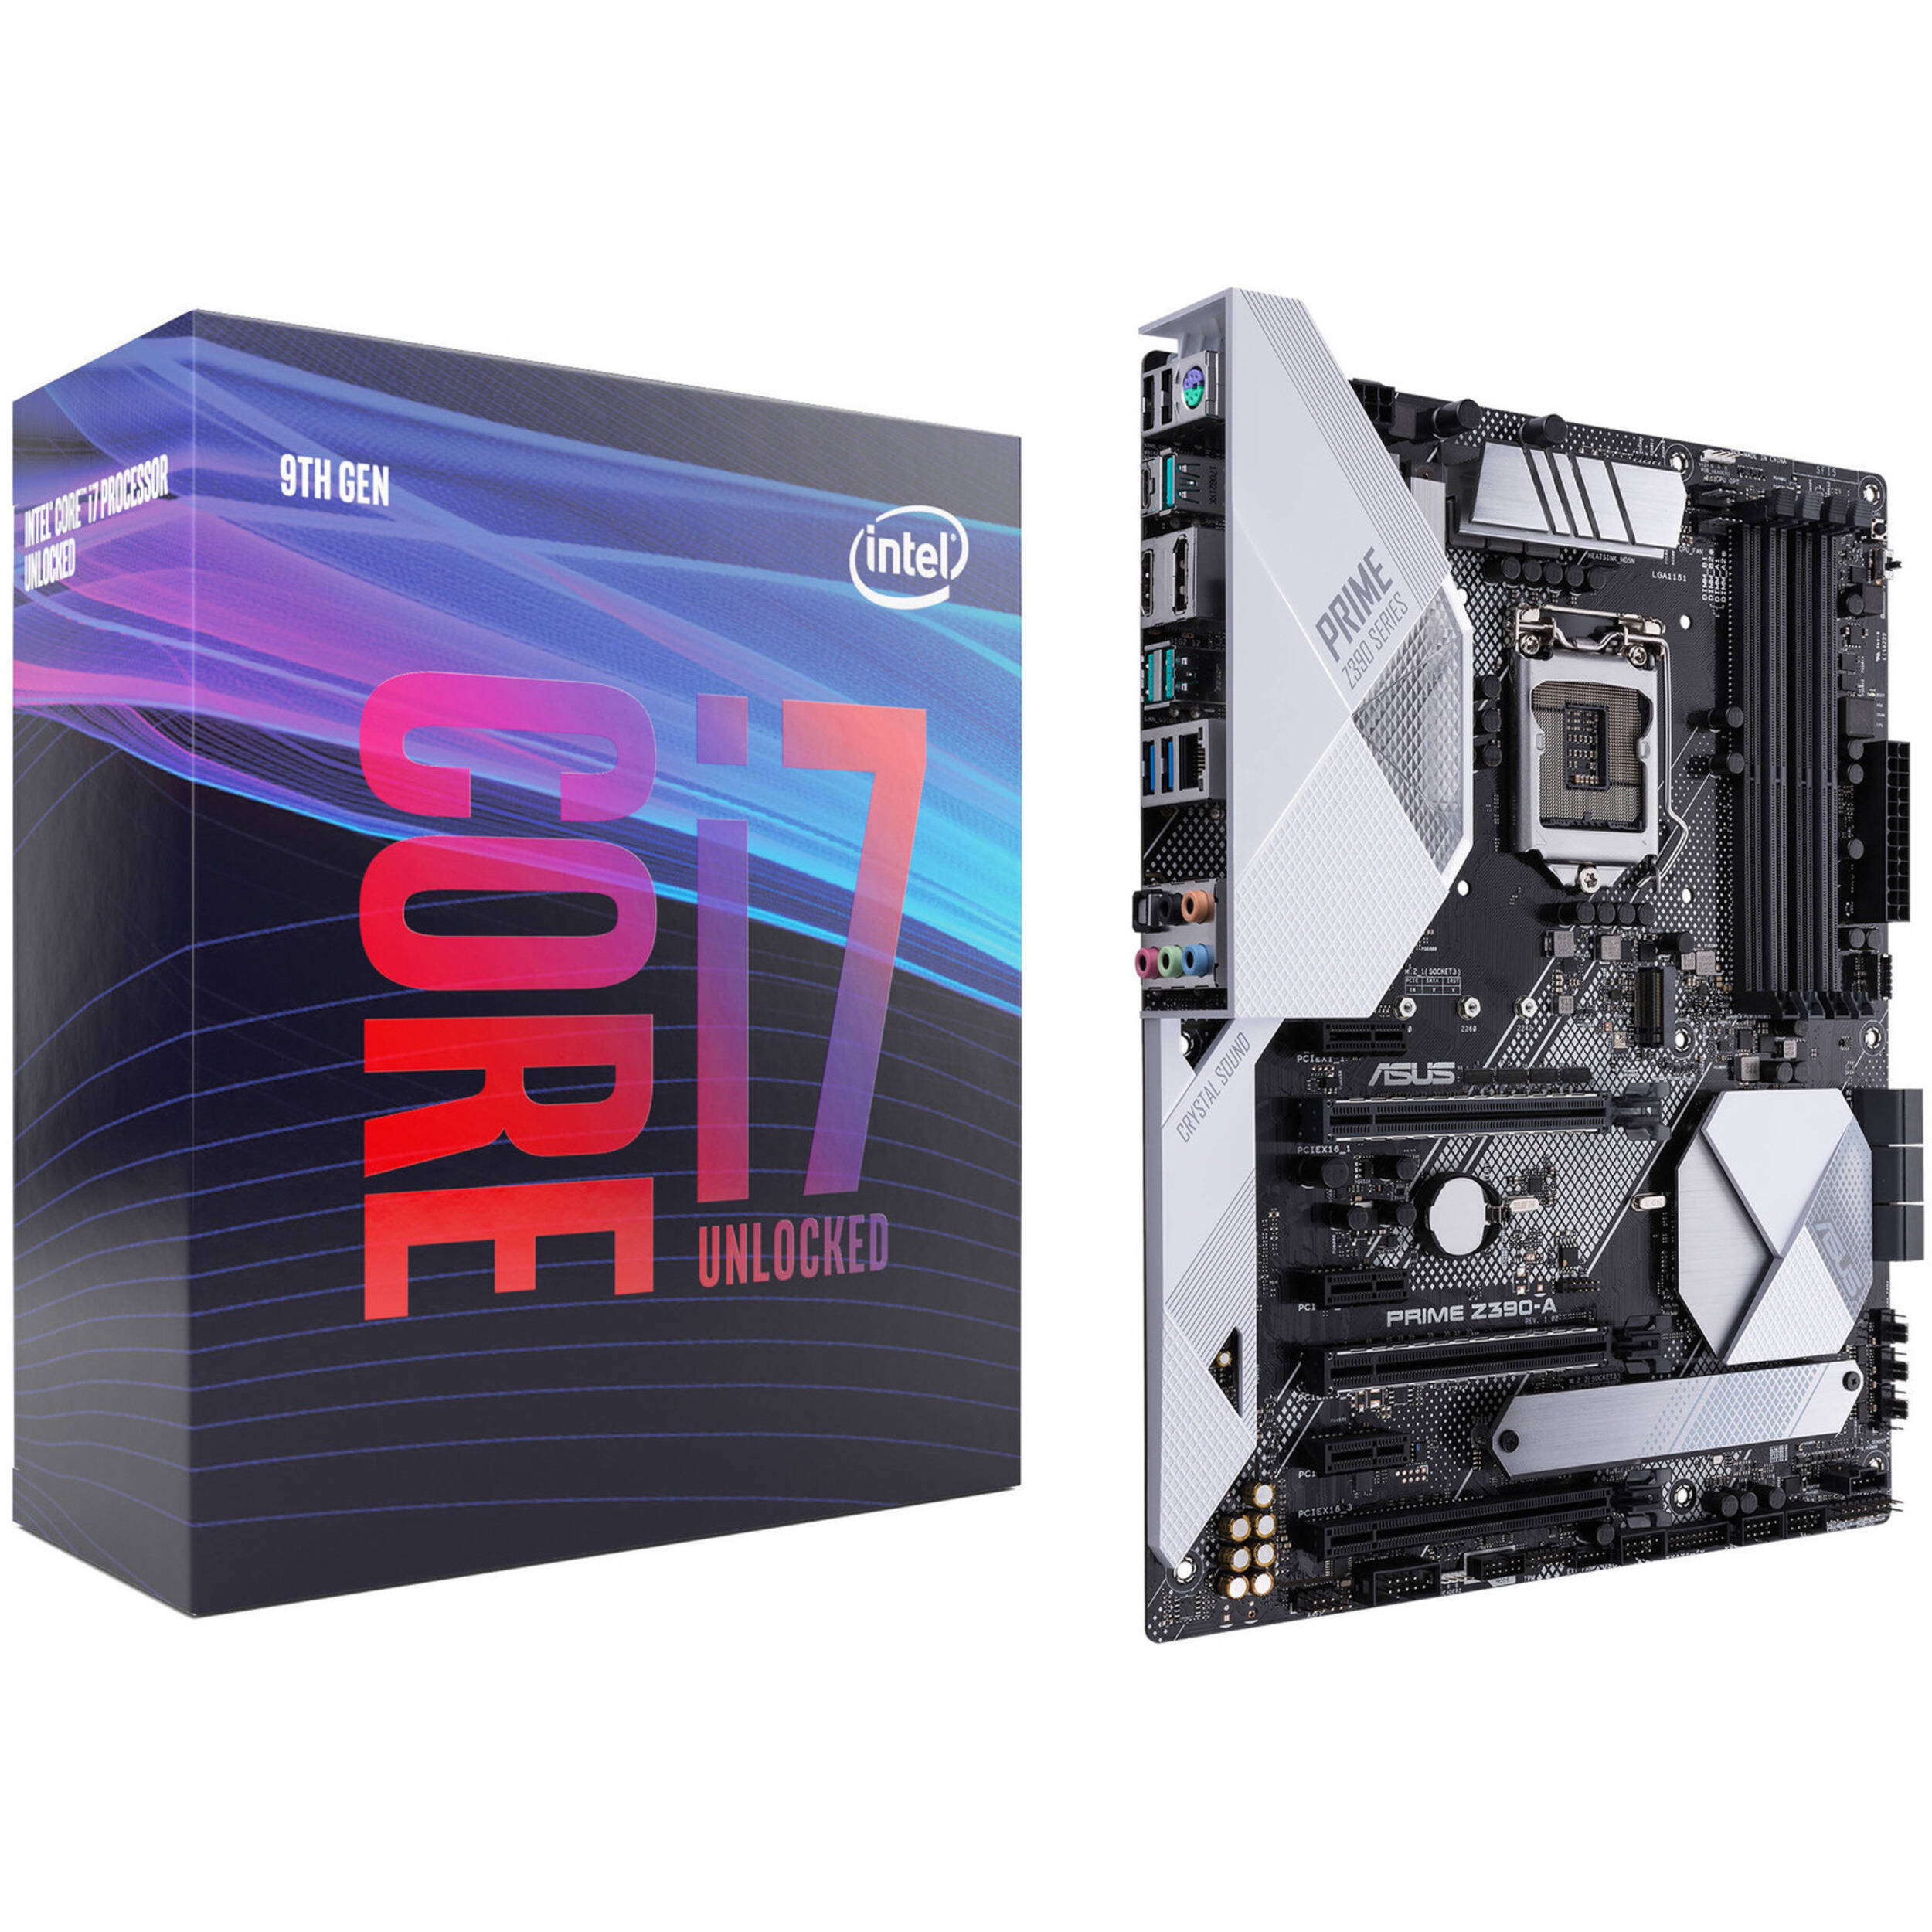 新品 intel Core i7-9700 BOX LGA1151 CPU